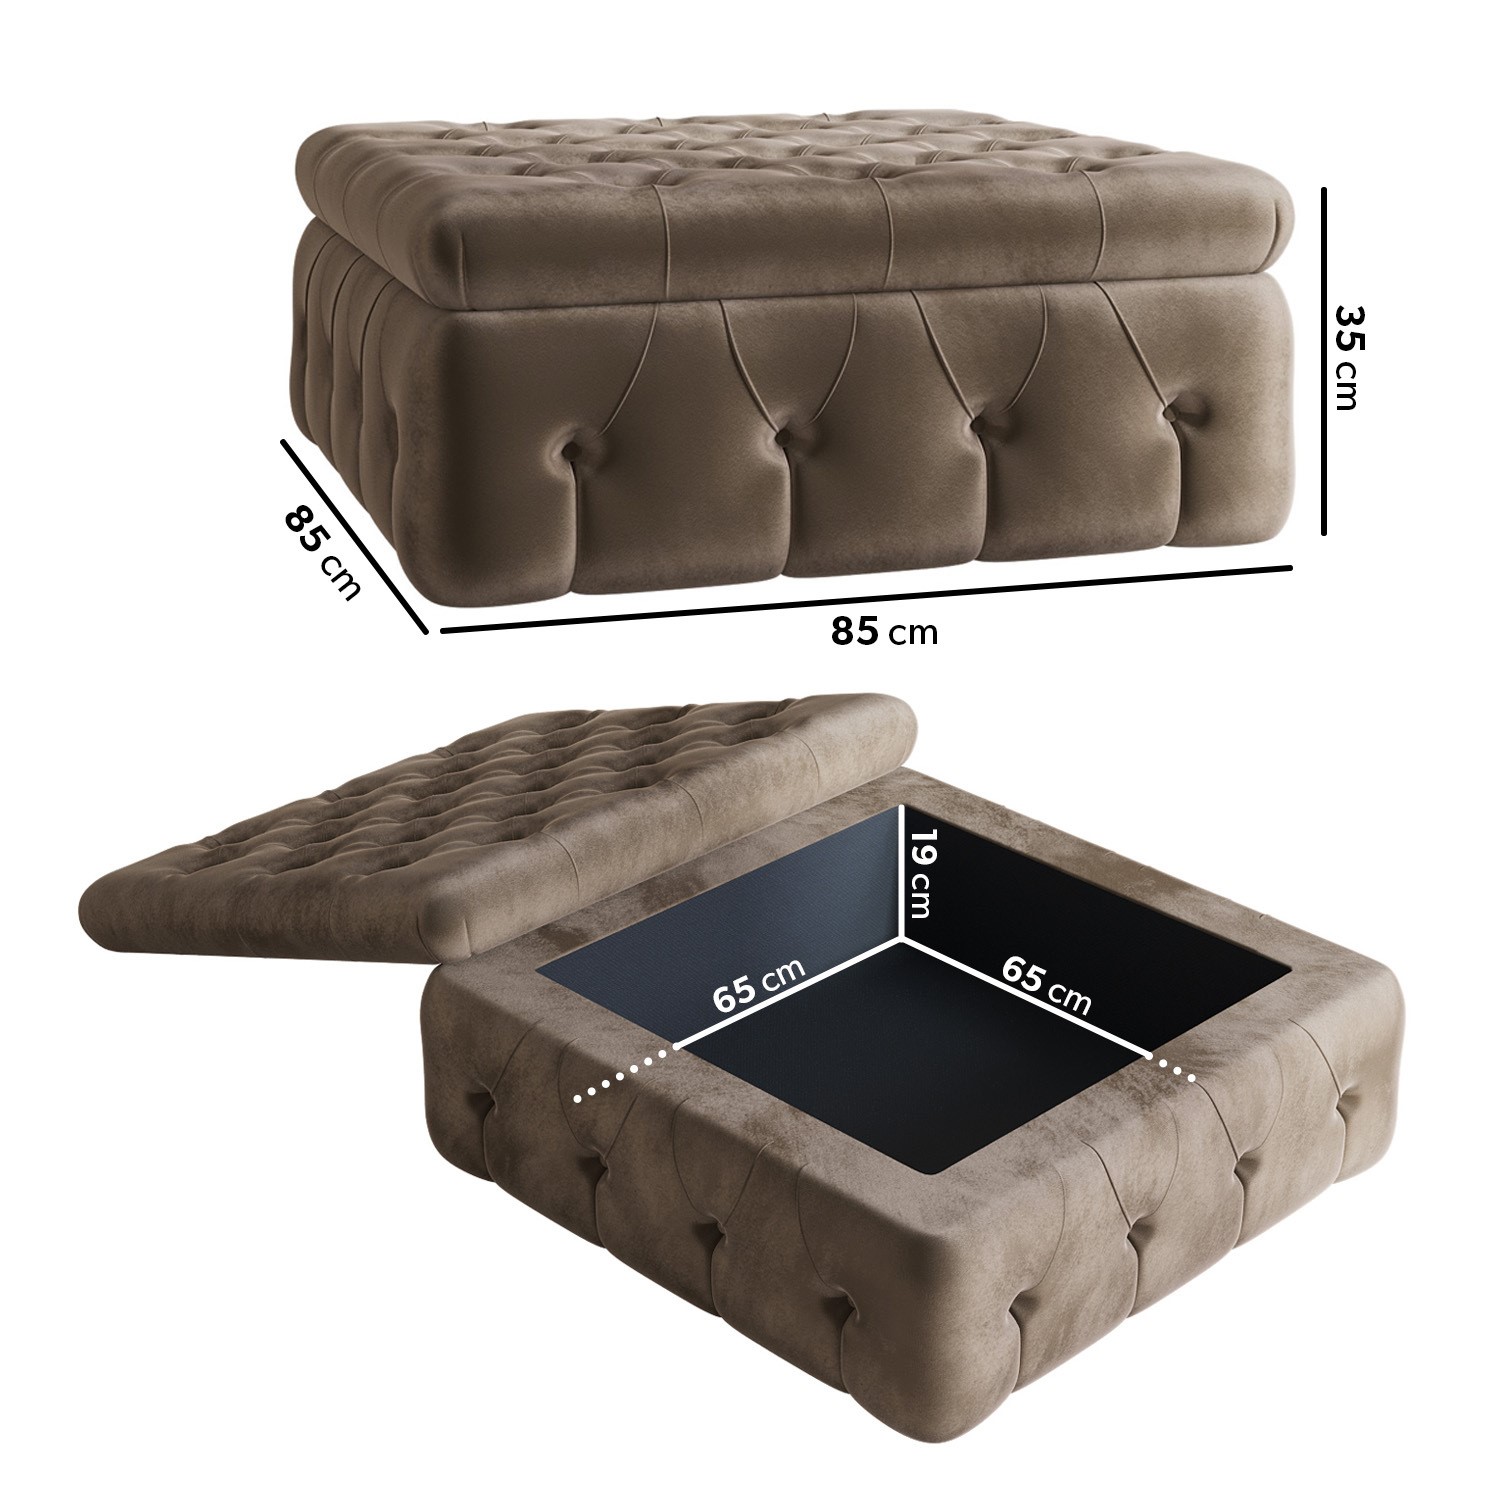 Read more about Large beige velvet storage footstool payton